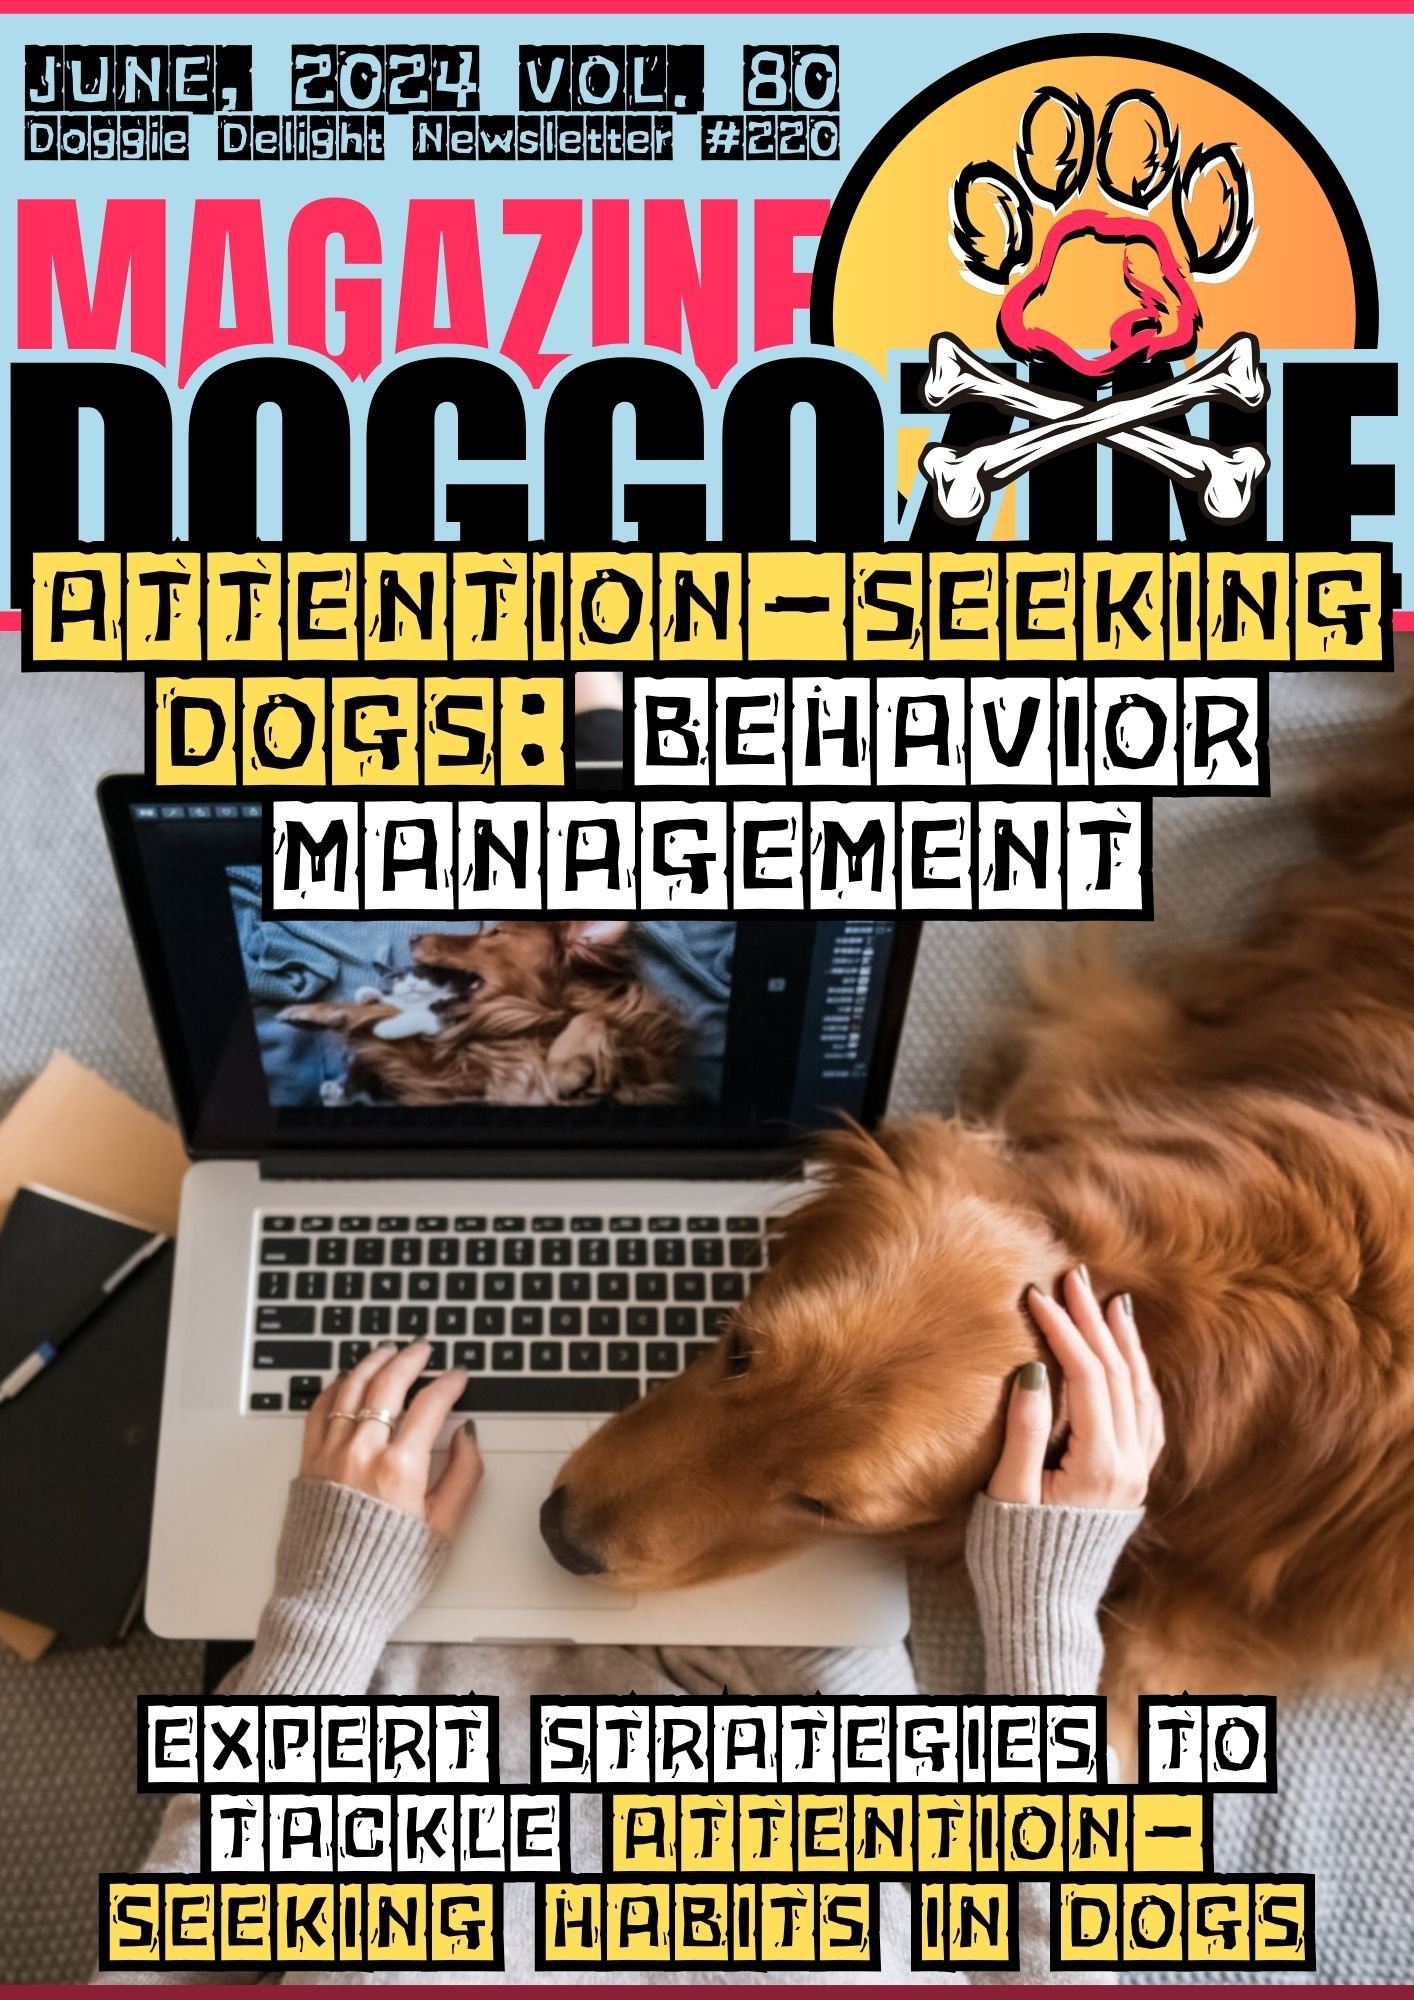 ATTENTION-SEEKING DOGS